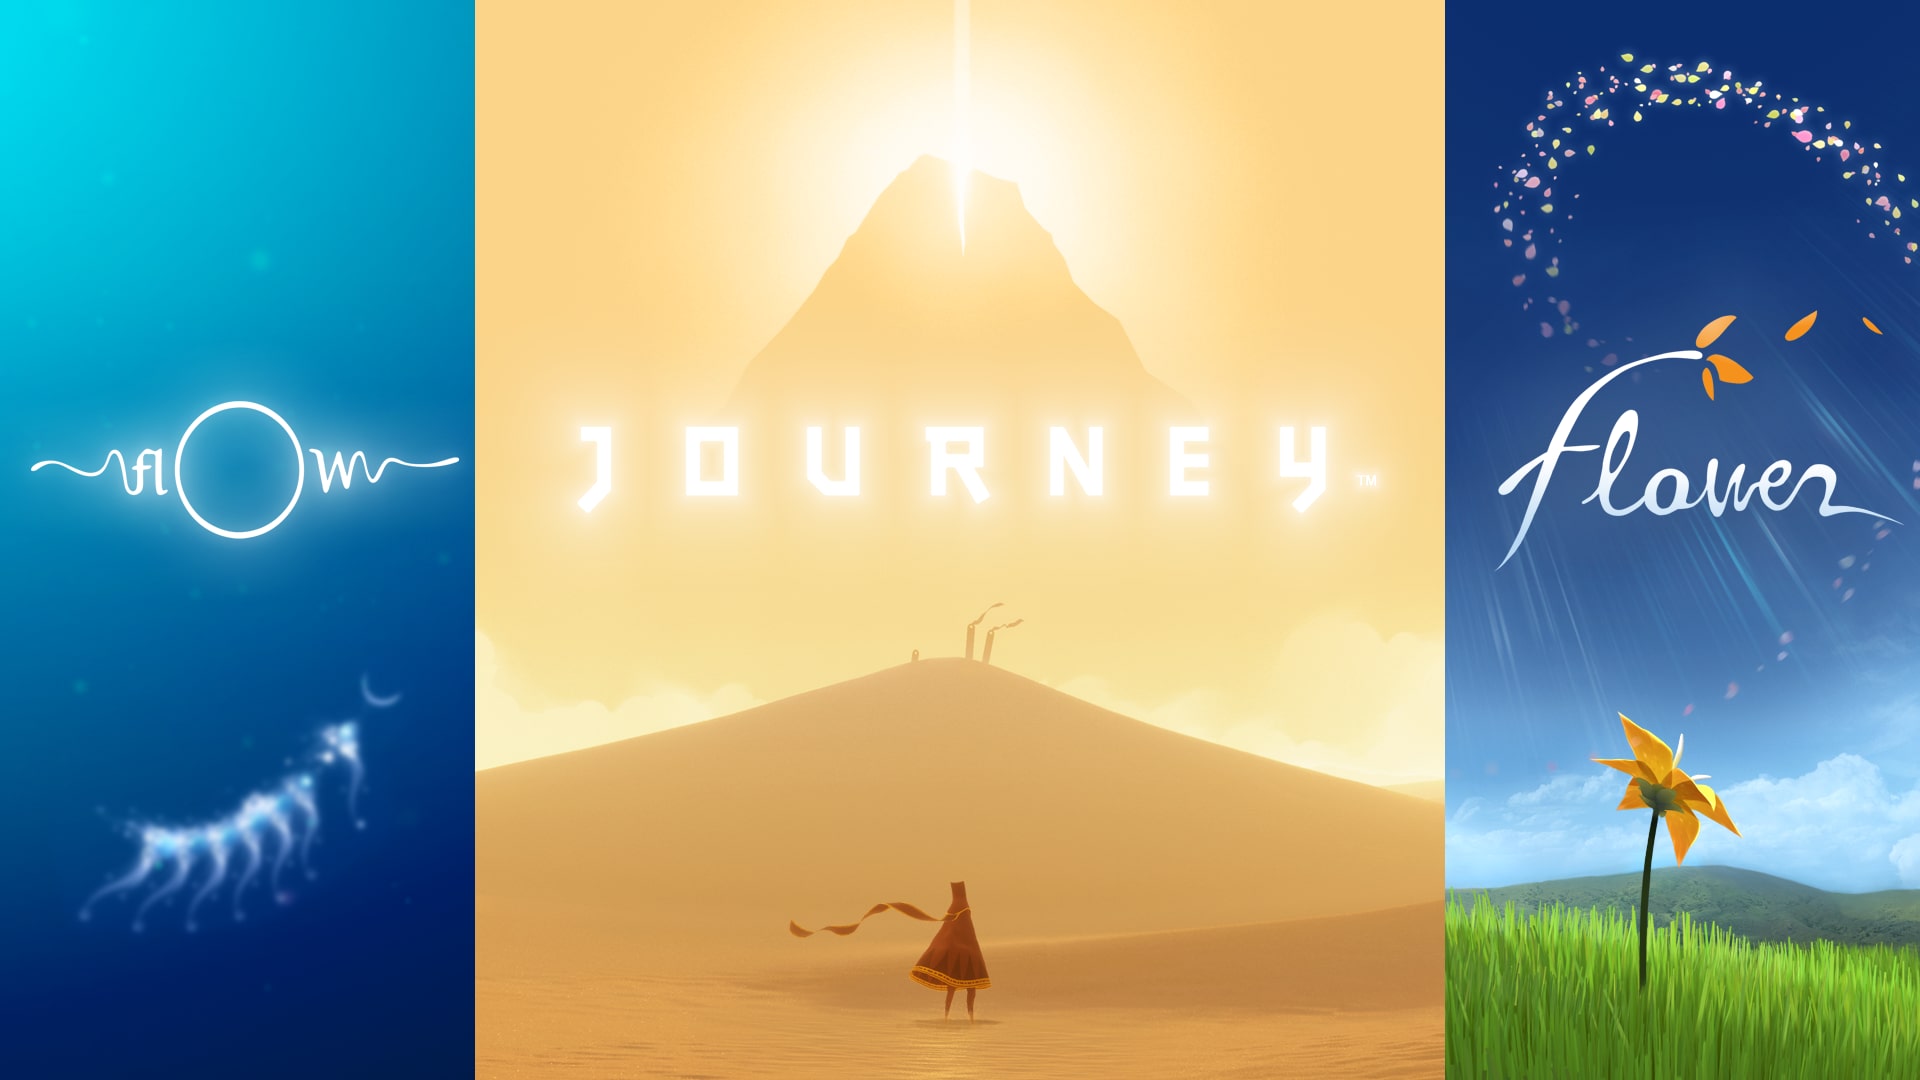 Perfect journey. Джорни ту зе севич планет. PLAYSTATION 3 Journey Collector's Edition. Voyage Journey trip разница. Success is a Journey not destination.